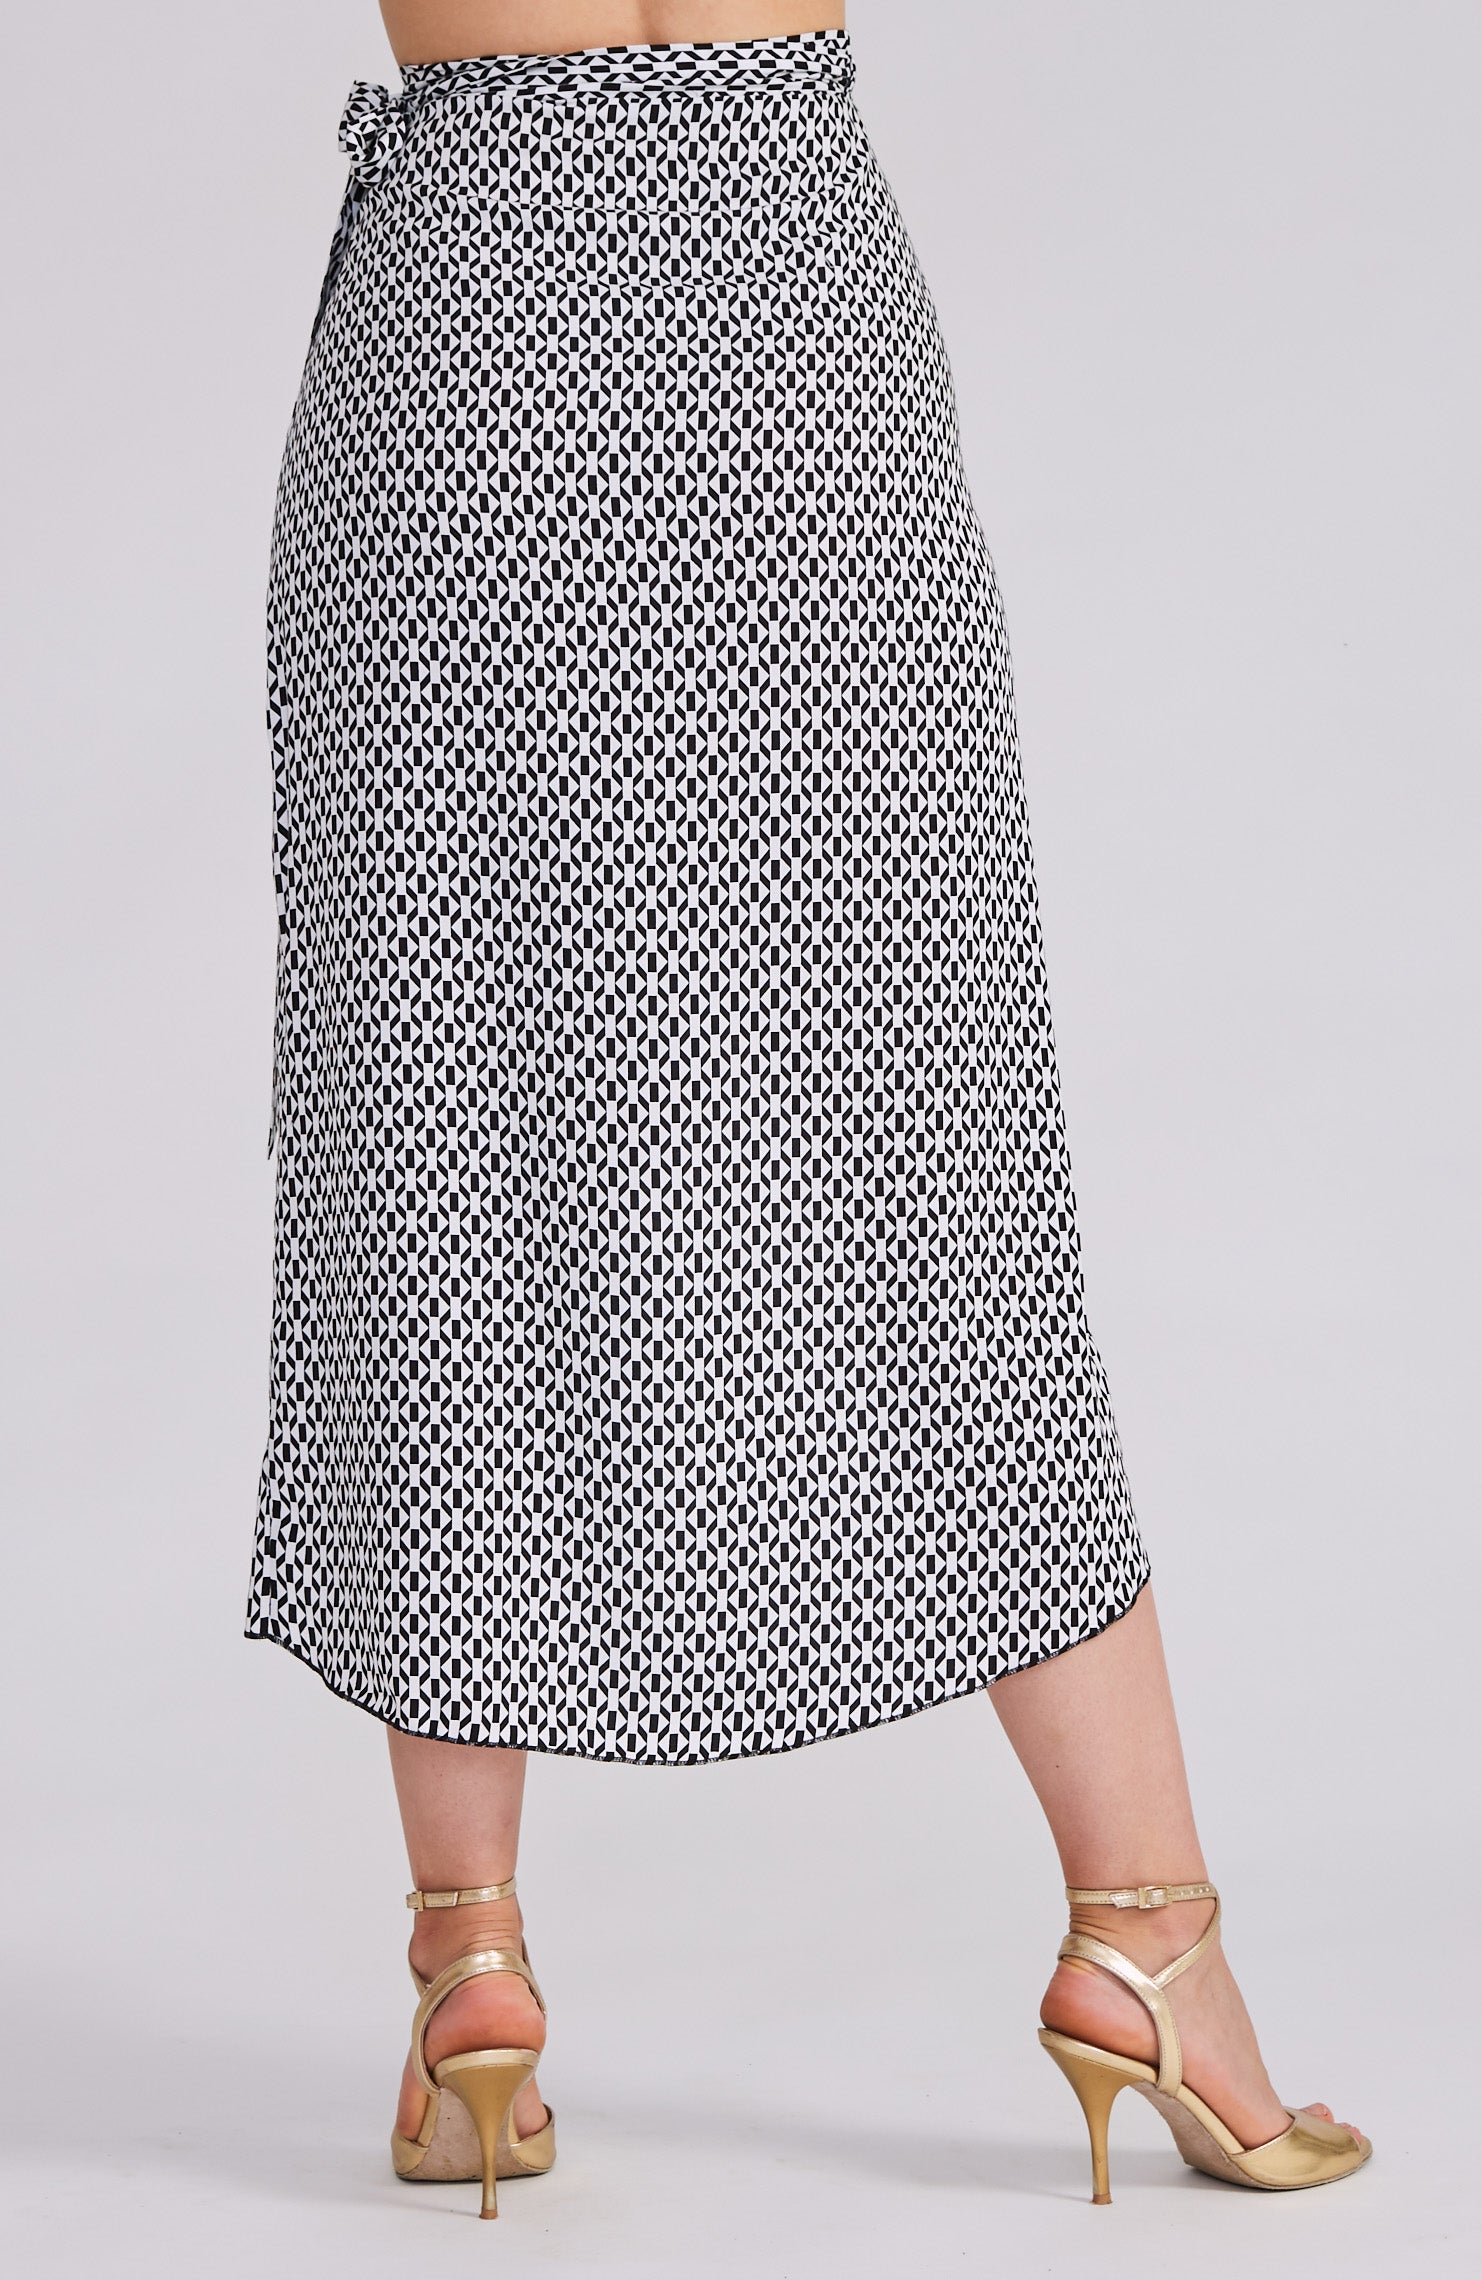 JULIET - Wrap Skirt in Black & White Geometric Print